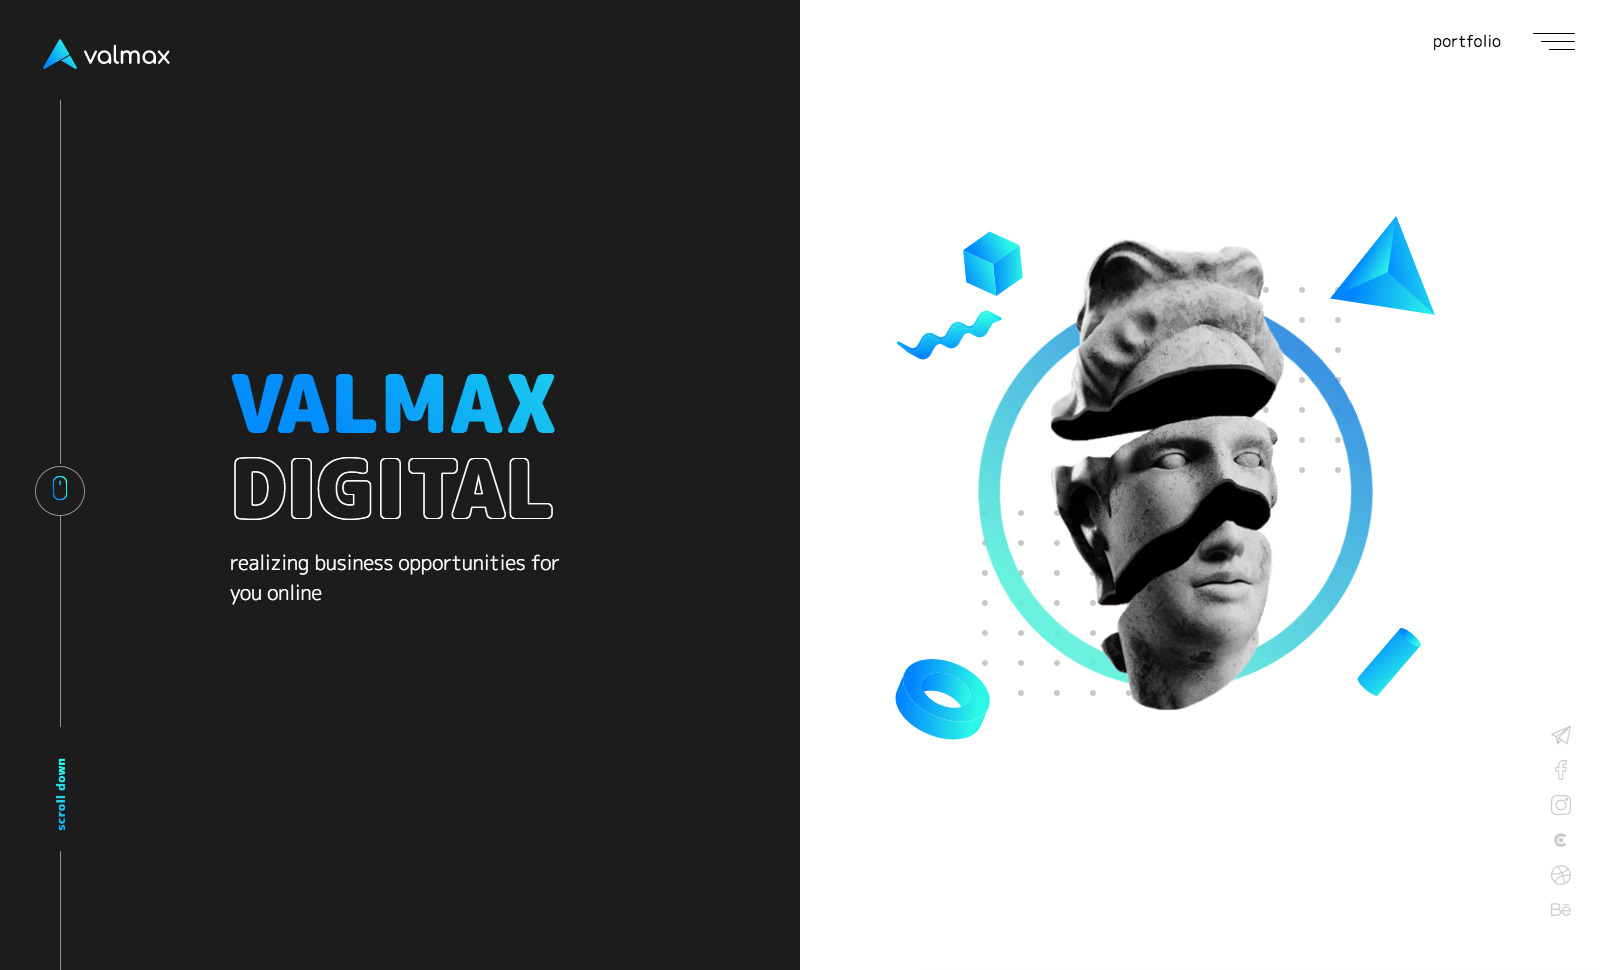 Valmax Digital